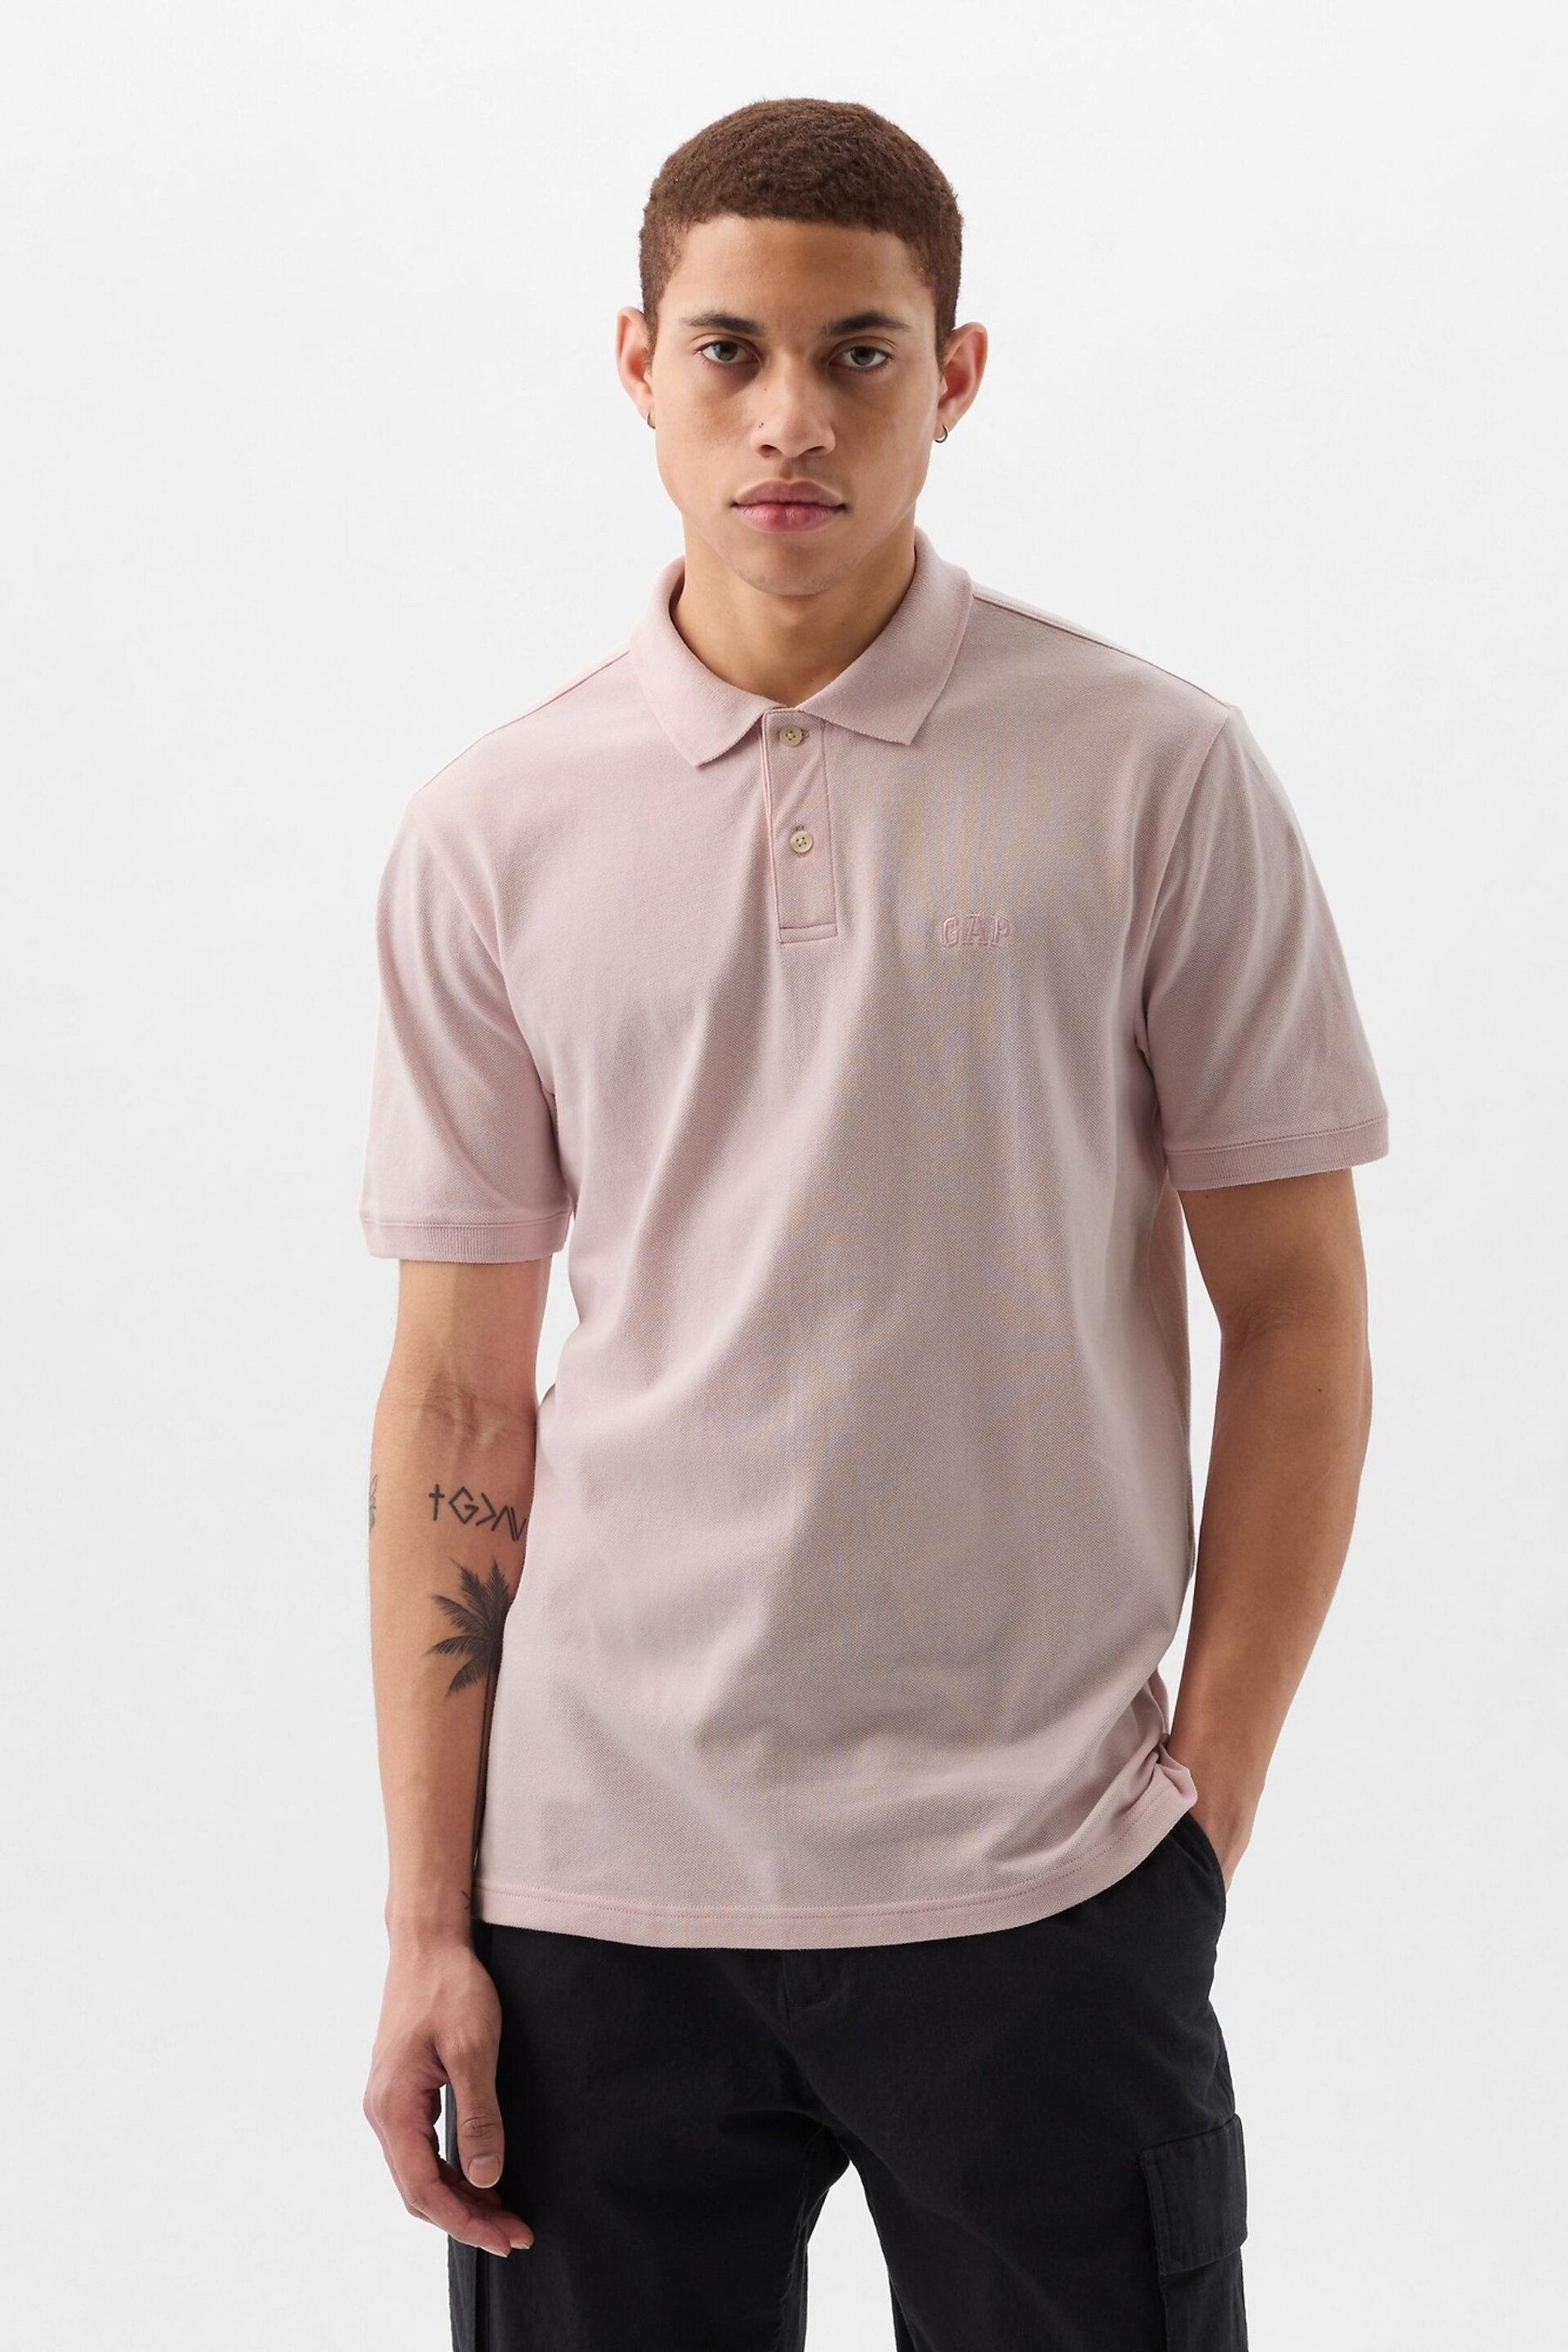 Gap Pink Logo Pique Short Sleeve Polo Shirt - Image 1 of 3